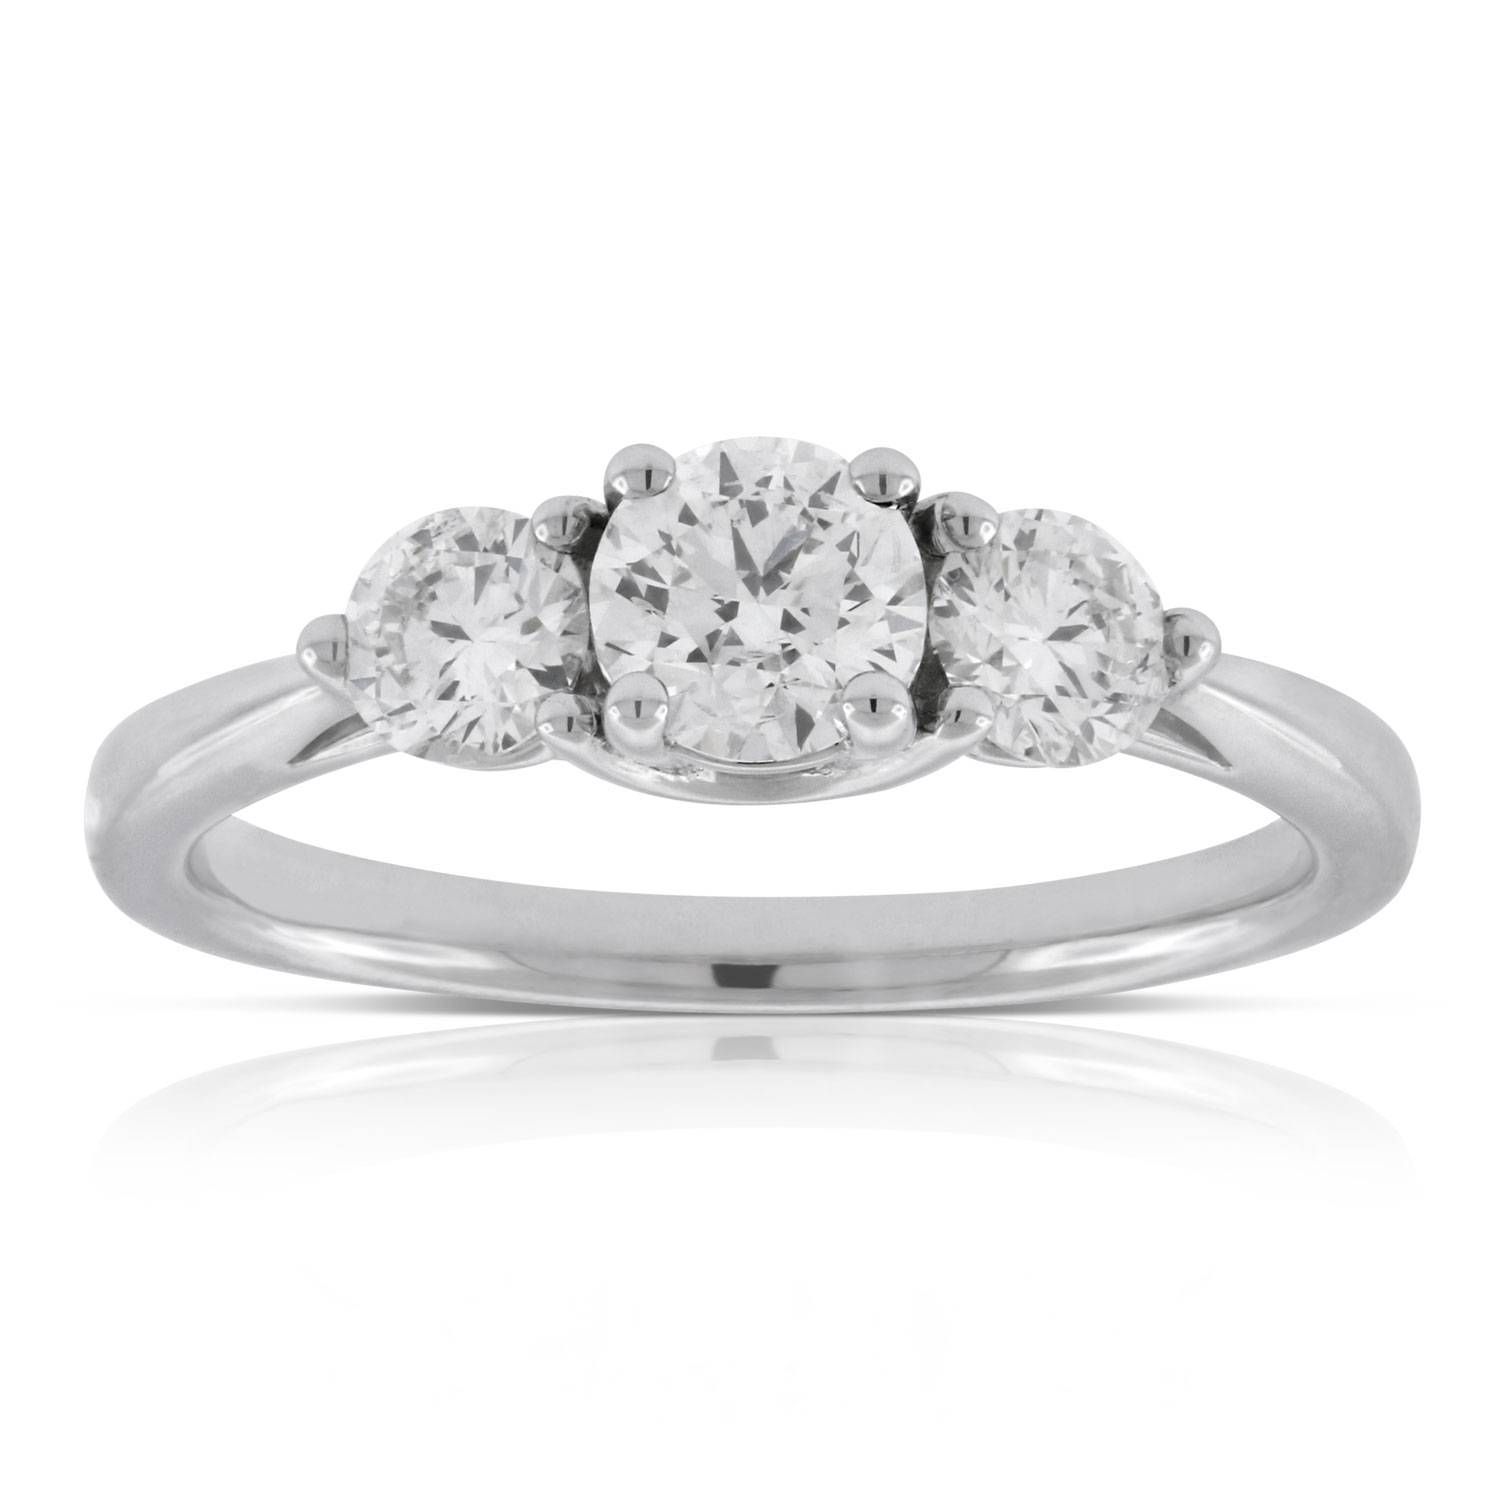 Anniversary Rings | Ben Bridge Jeweler With Most Current Diamonds Anniversary Rings (View 15 of 25)